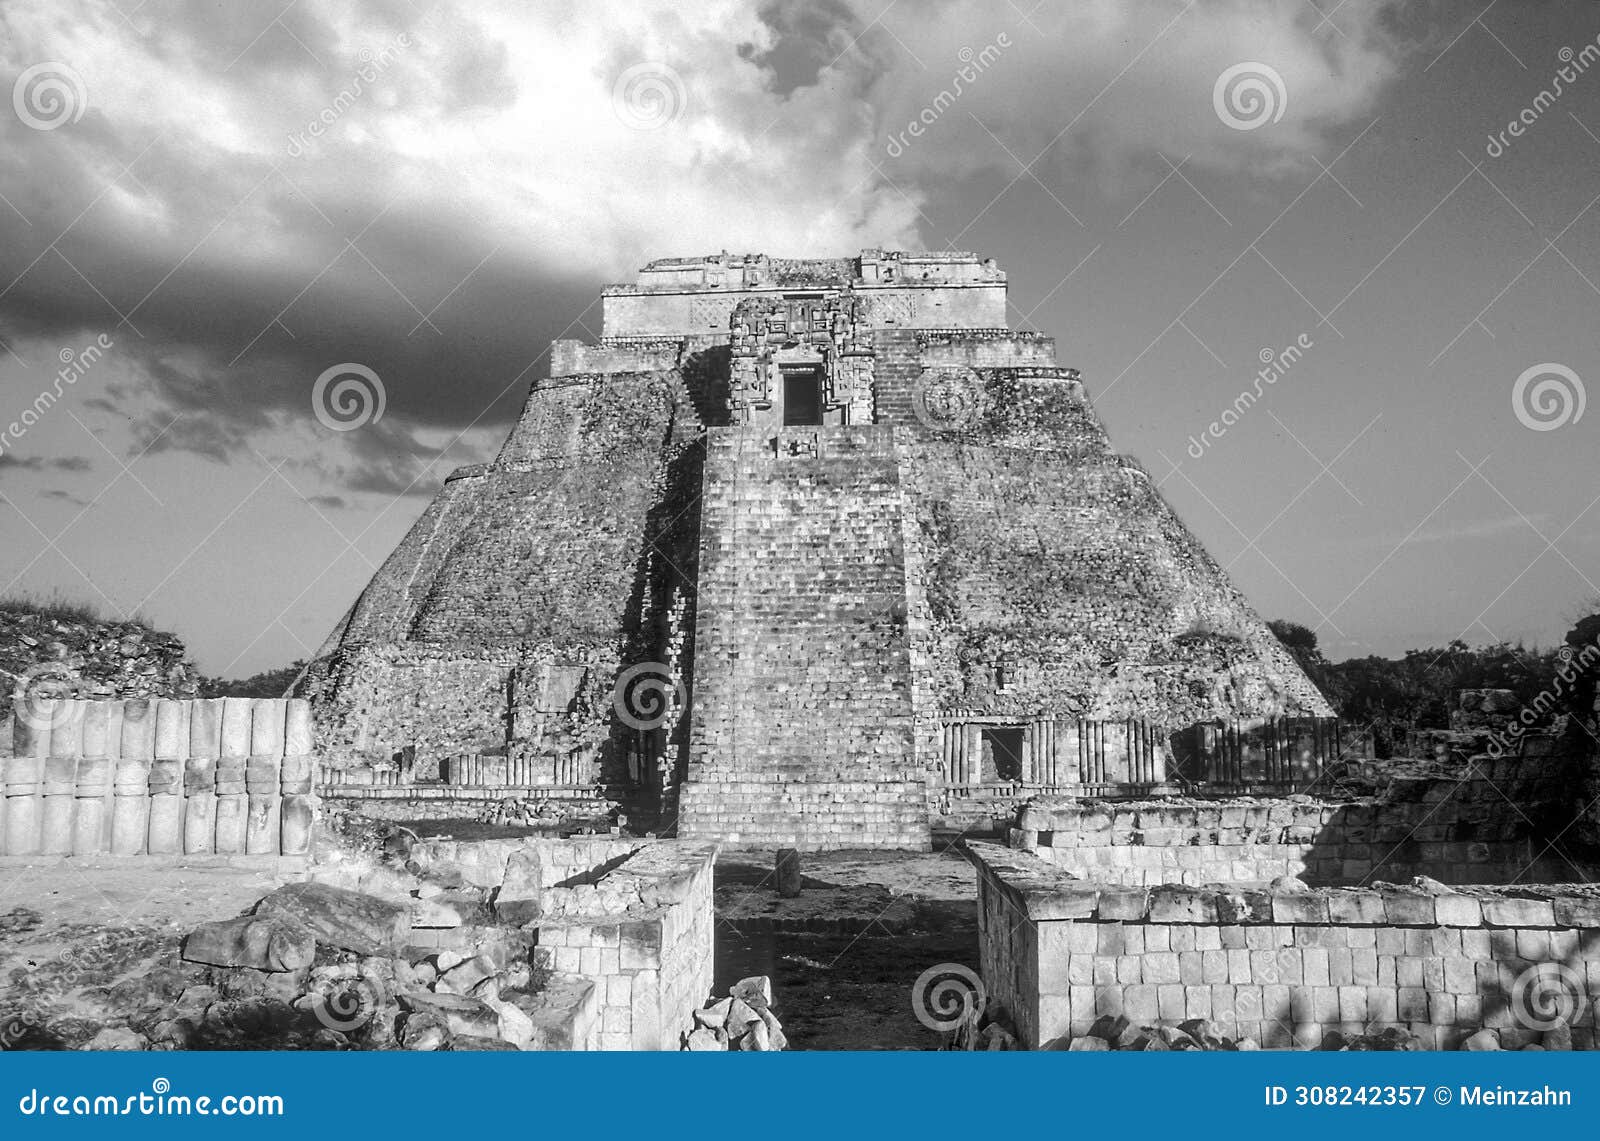 pyramid of the magician - piramide del adivino - in ancient mayan city uxmal